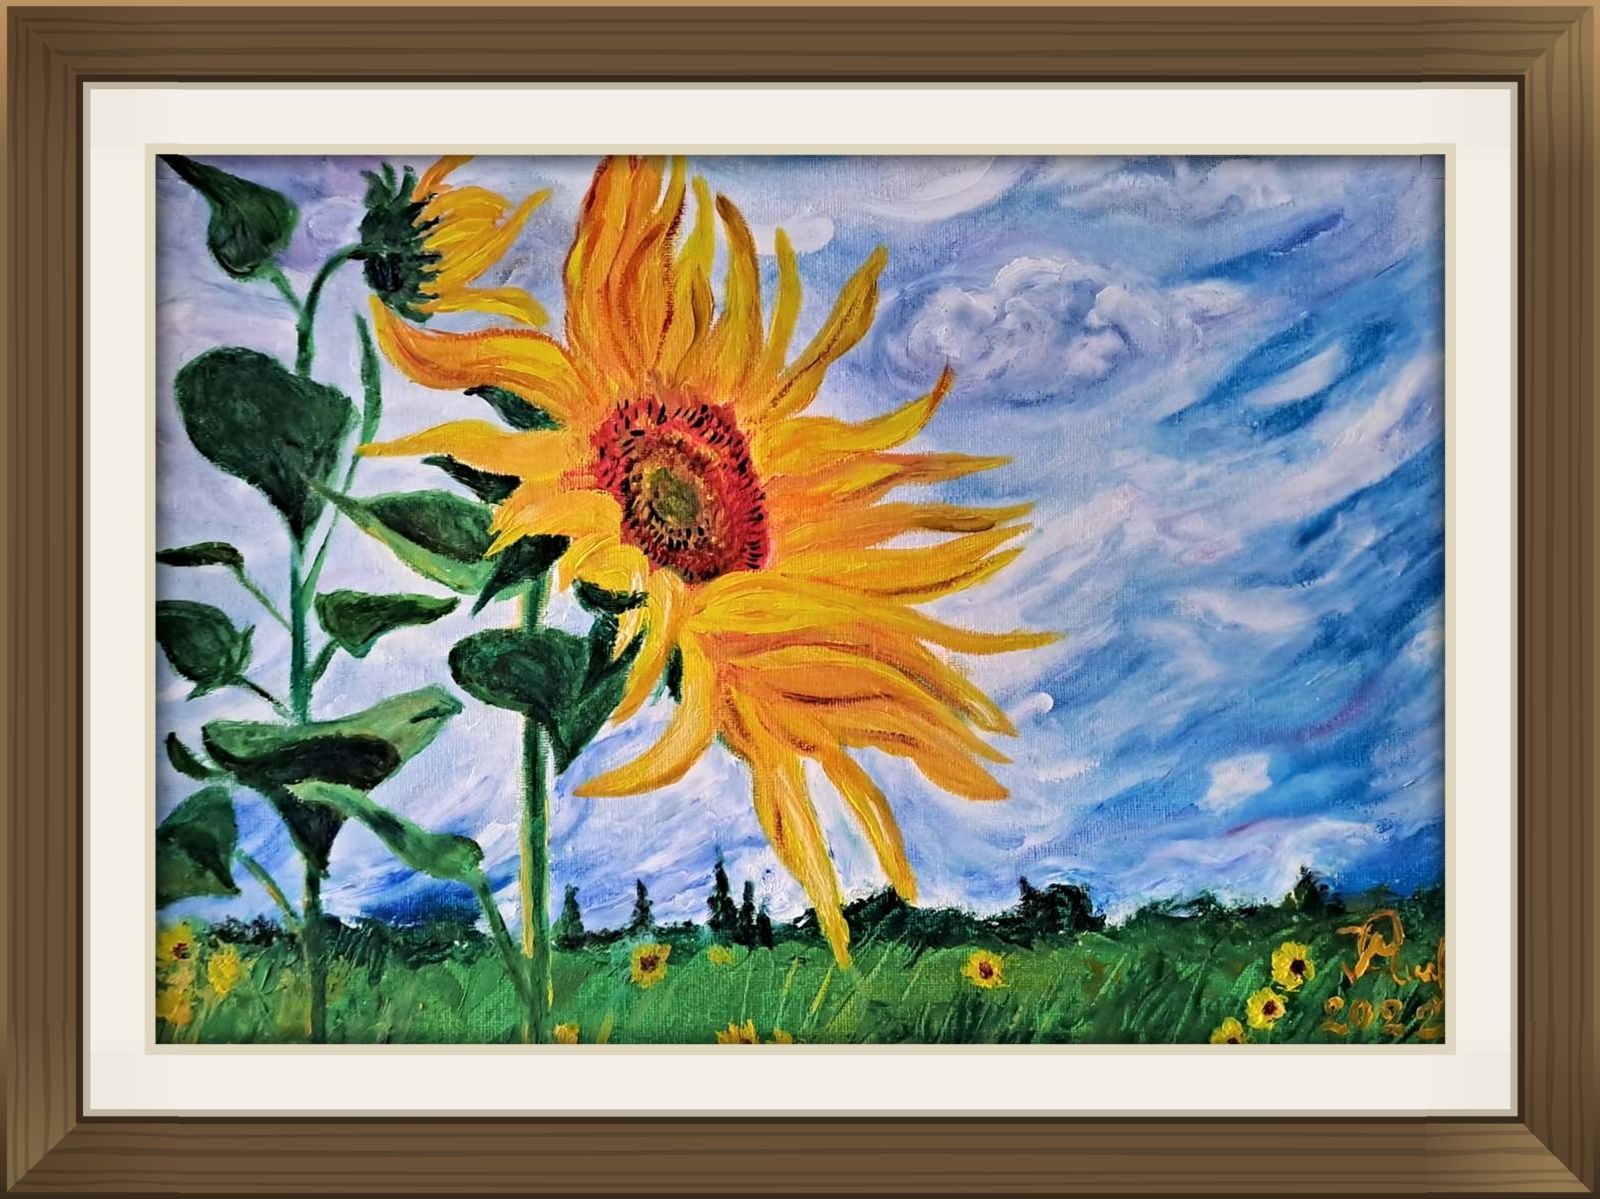 Painting Sunflower